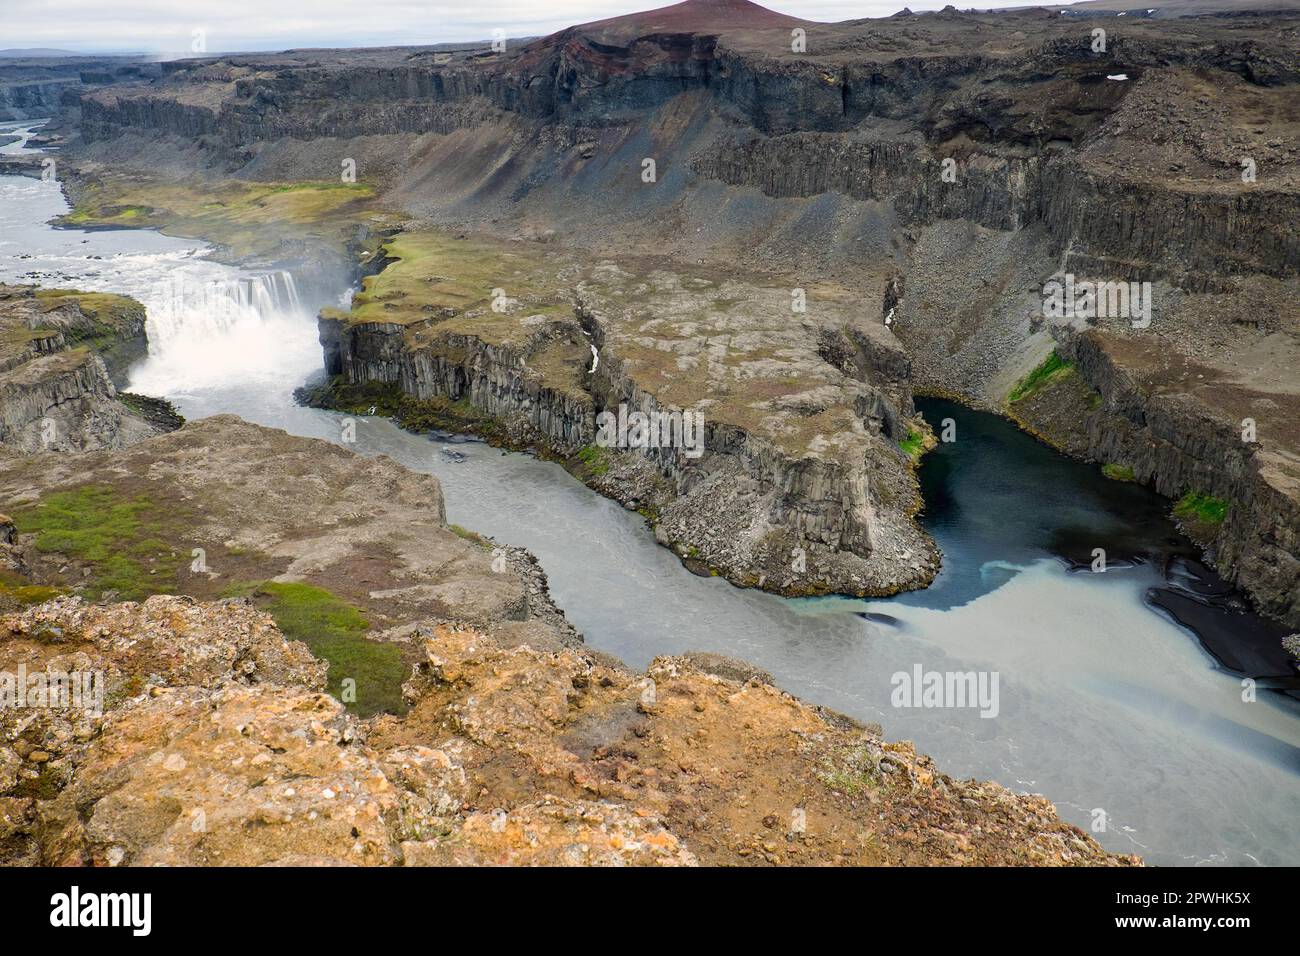 La gorge de Jokulsargljufur en Islande avec la chute d'eau de Hafragilsfoss Banque D'Images